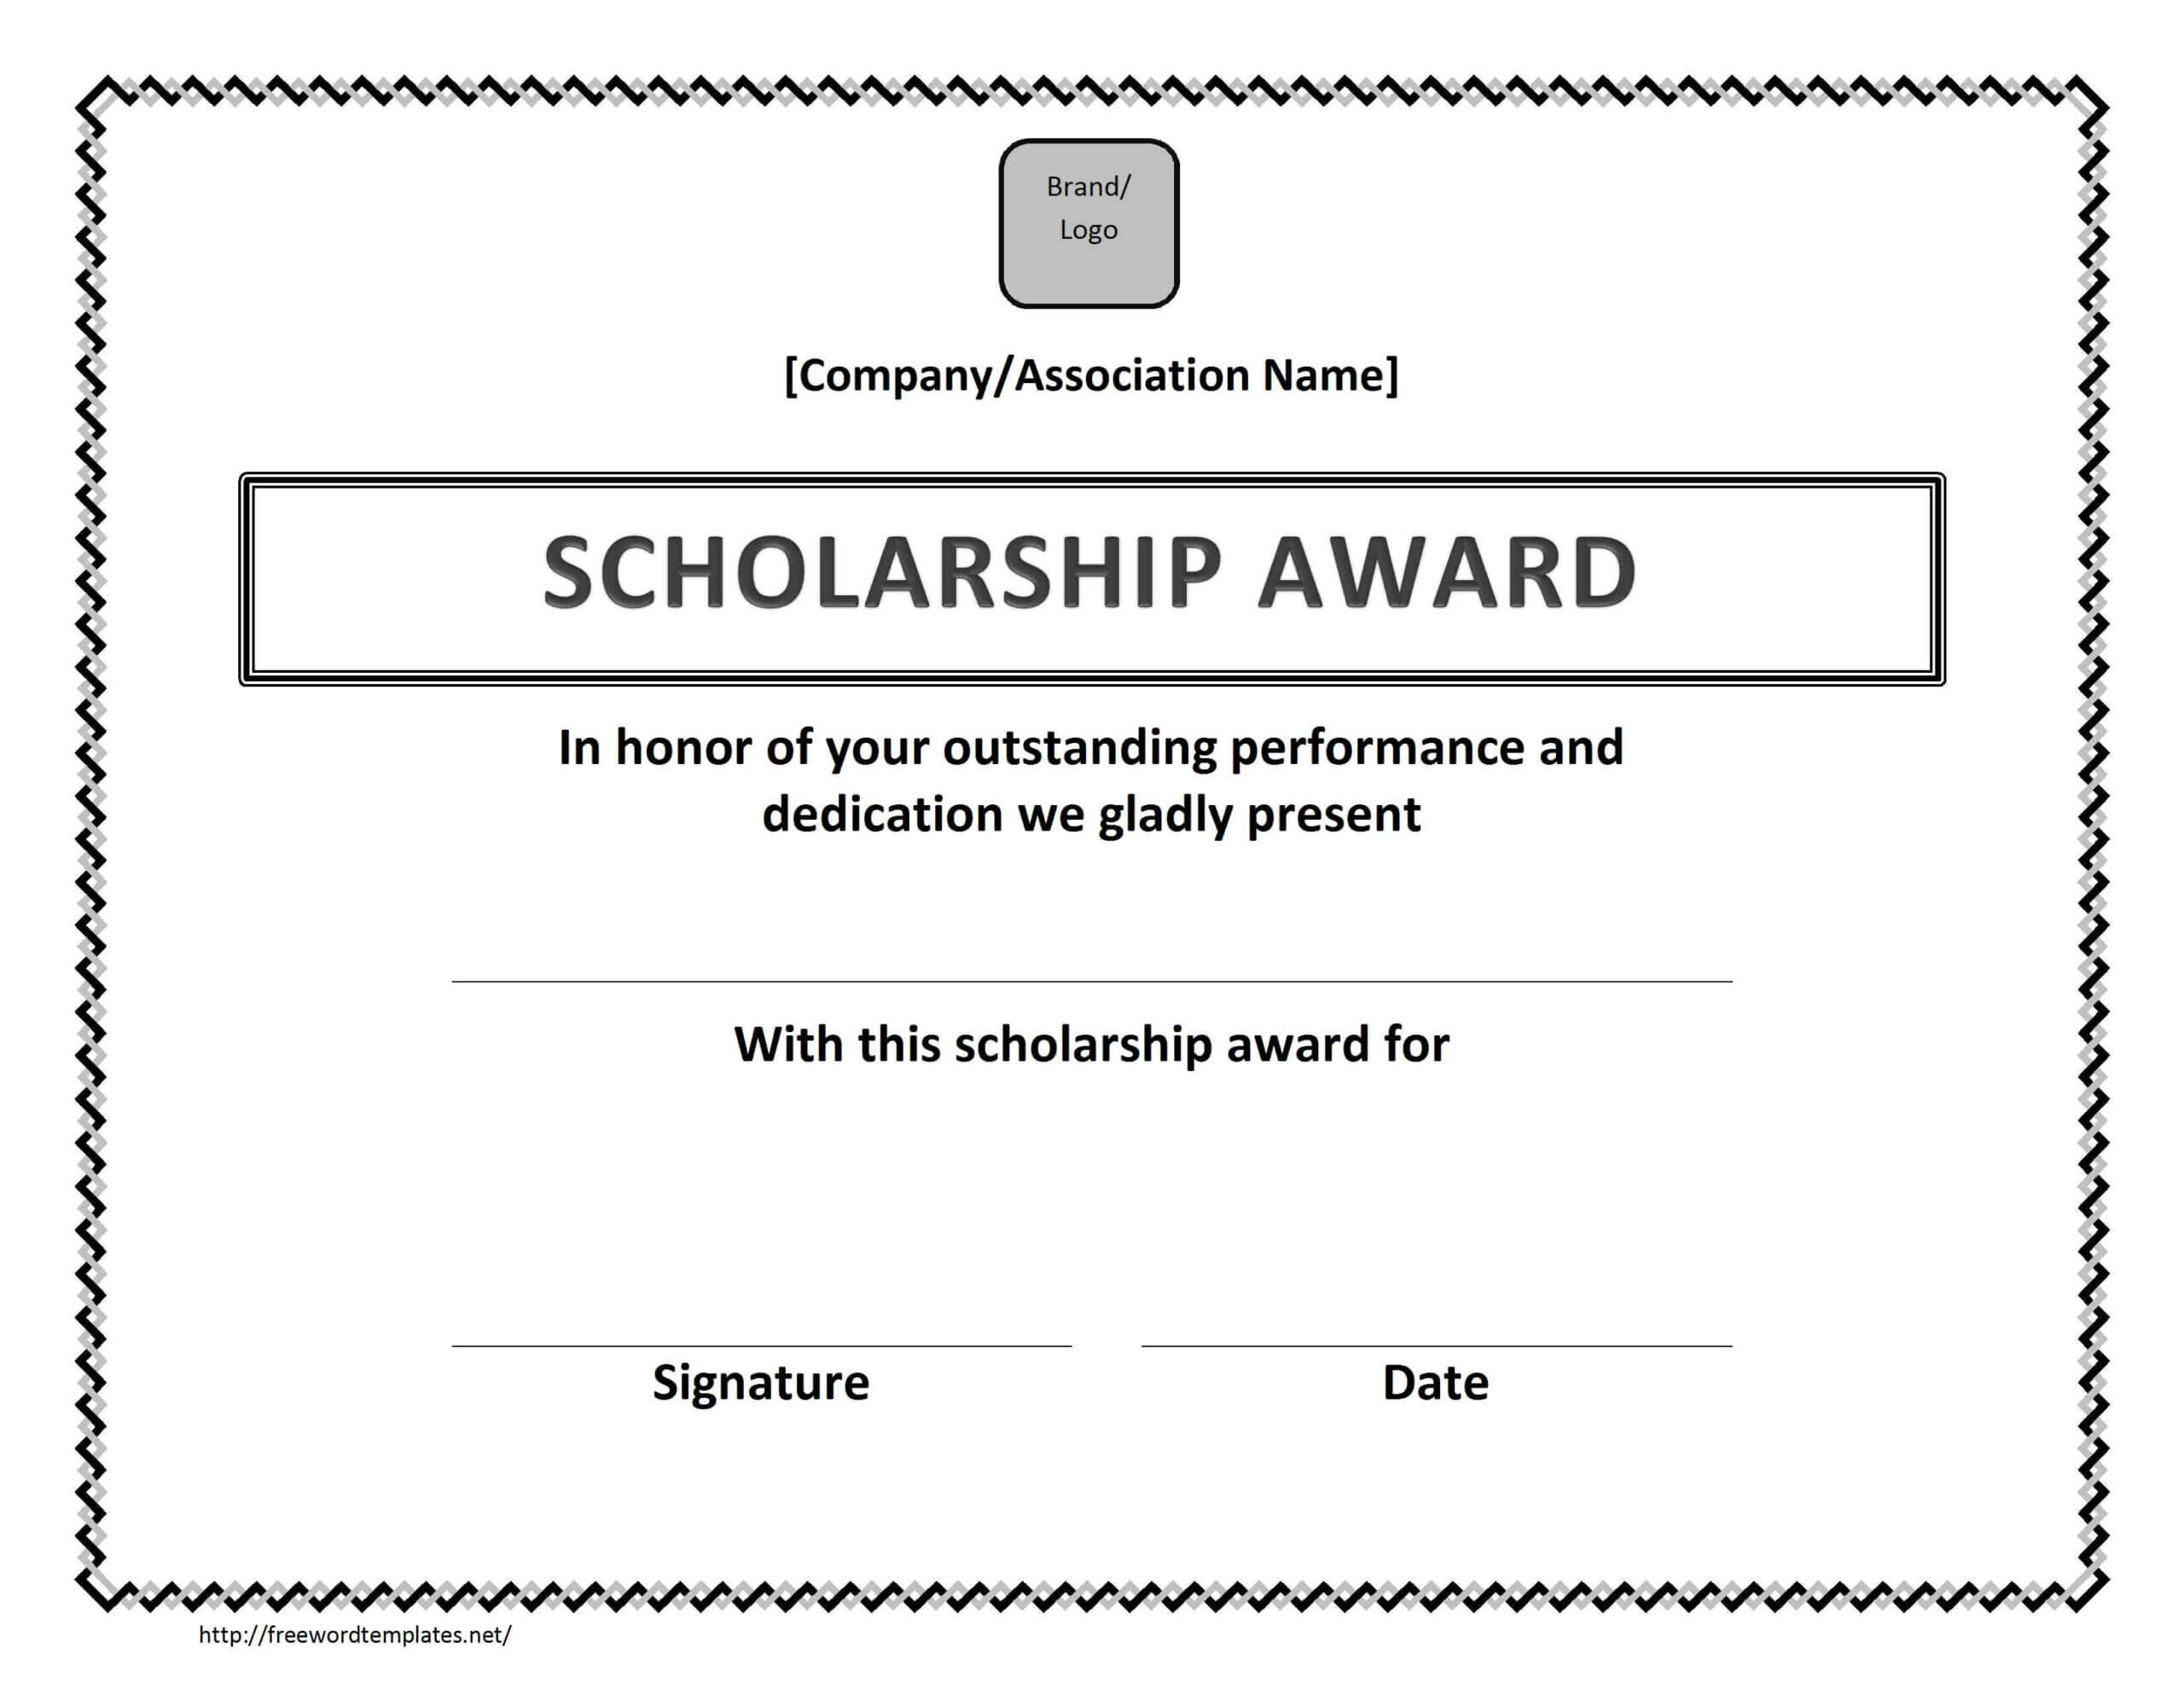 Scholarship Award Certificate Template Intended For Microsoft Word Award Certificate Template